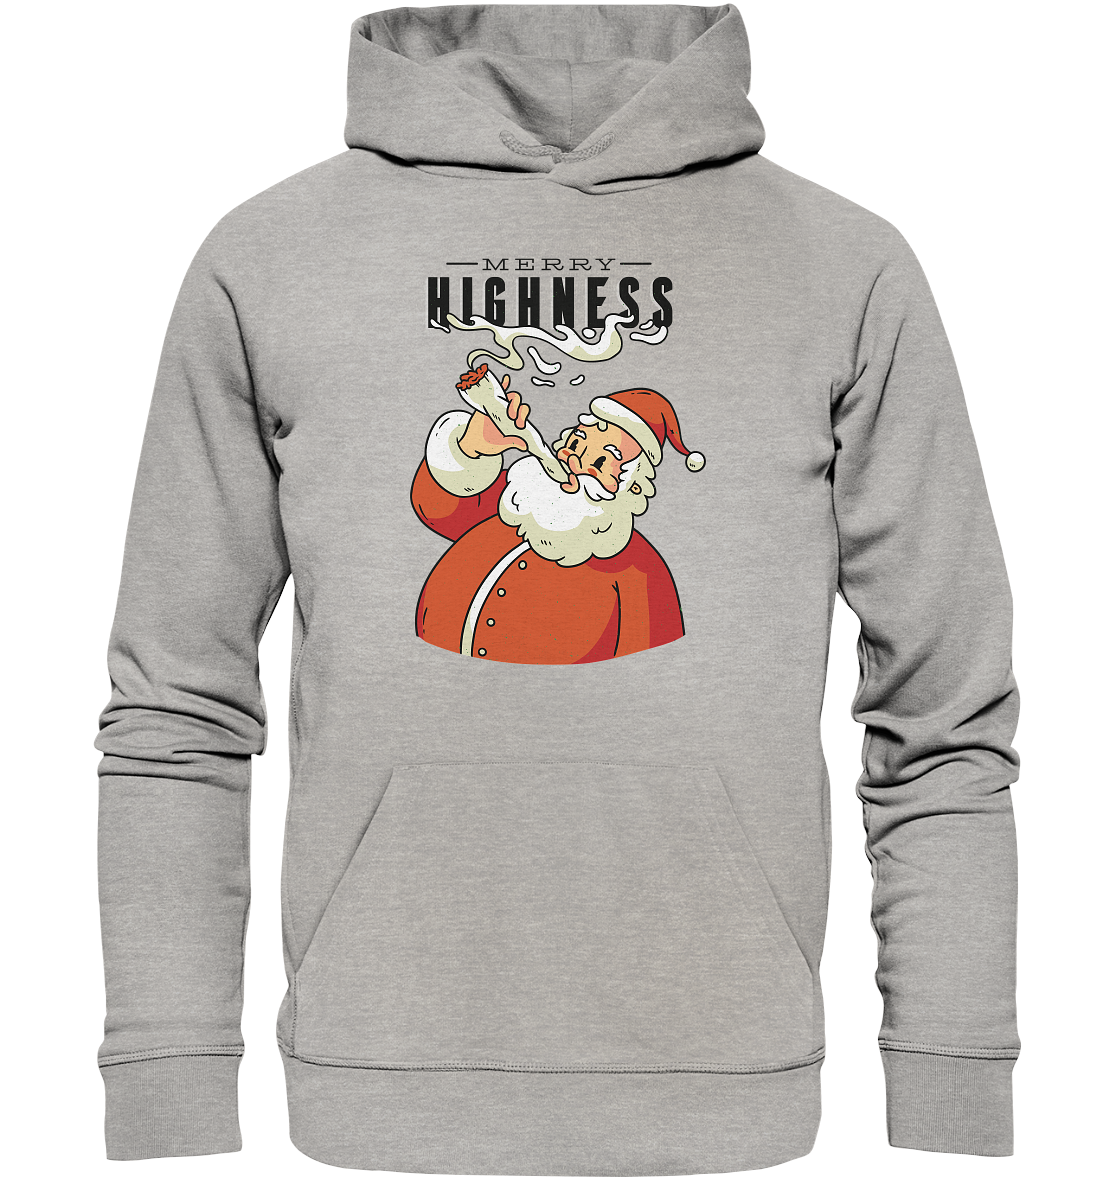 Christmas Weed Santa Claus Merry Highness - Organic Basic Hoodie